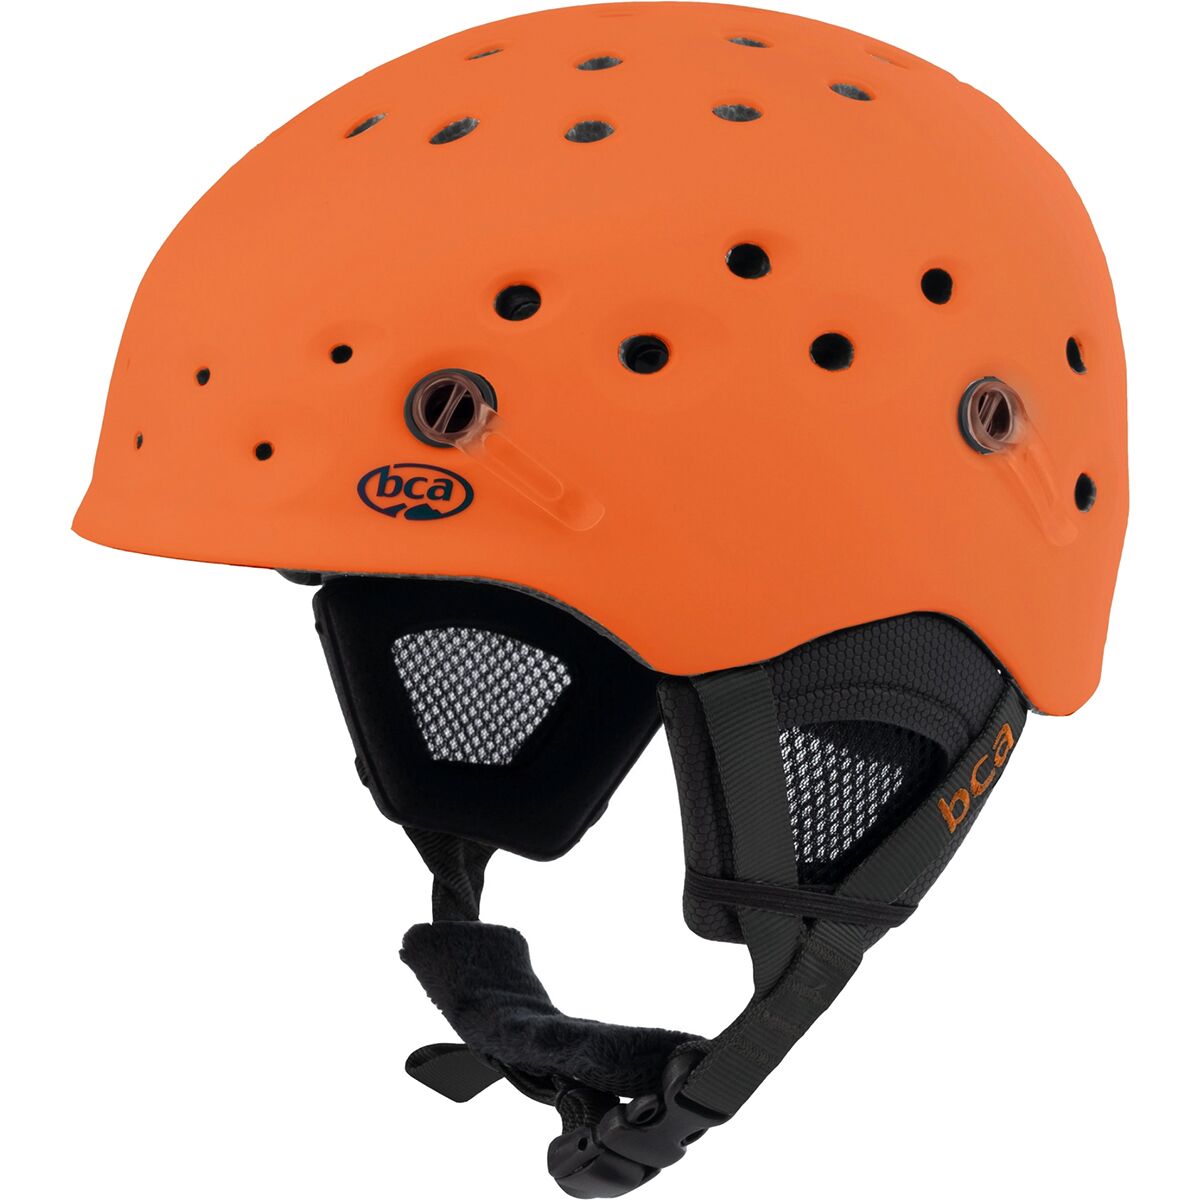 Backcountry Access BC Air Helmet Orange